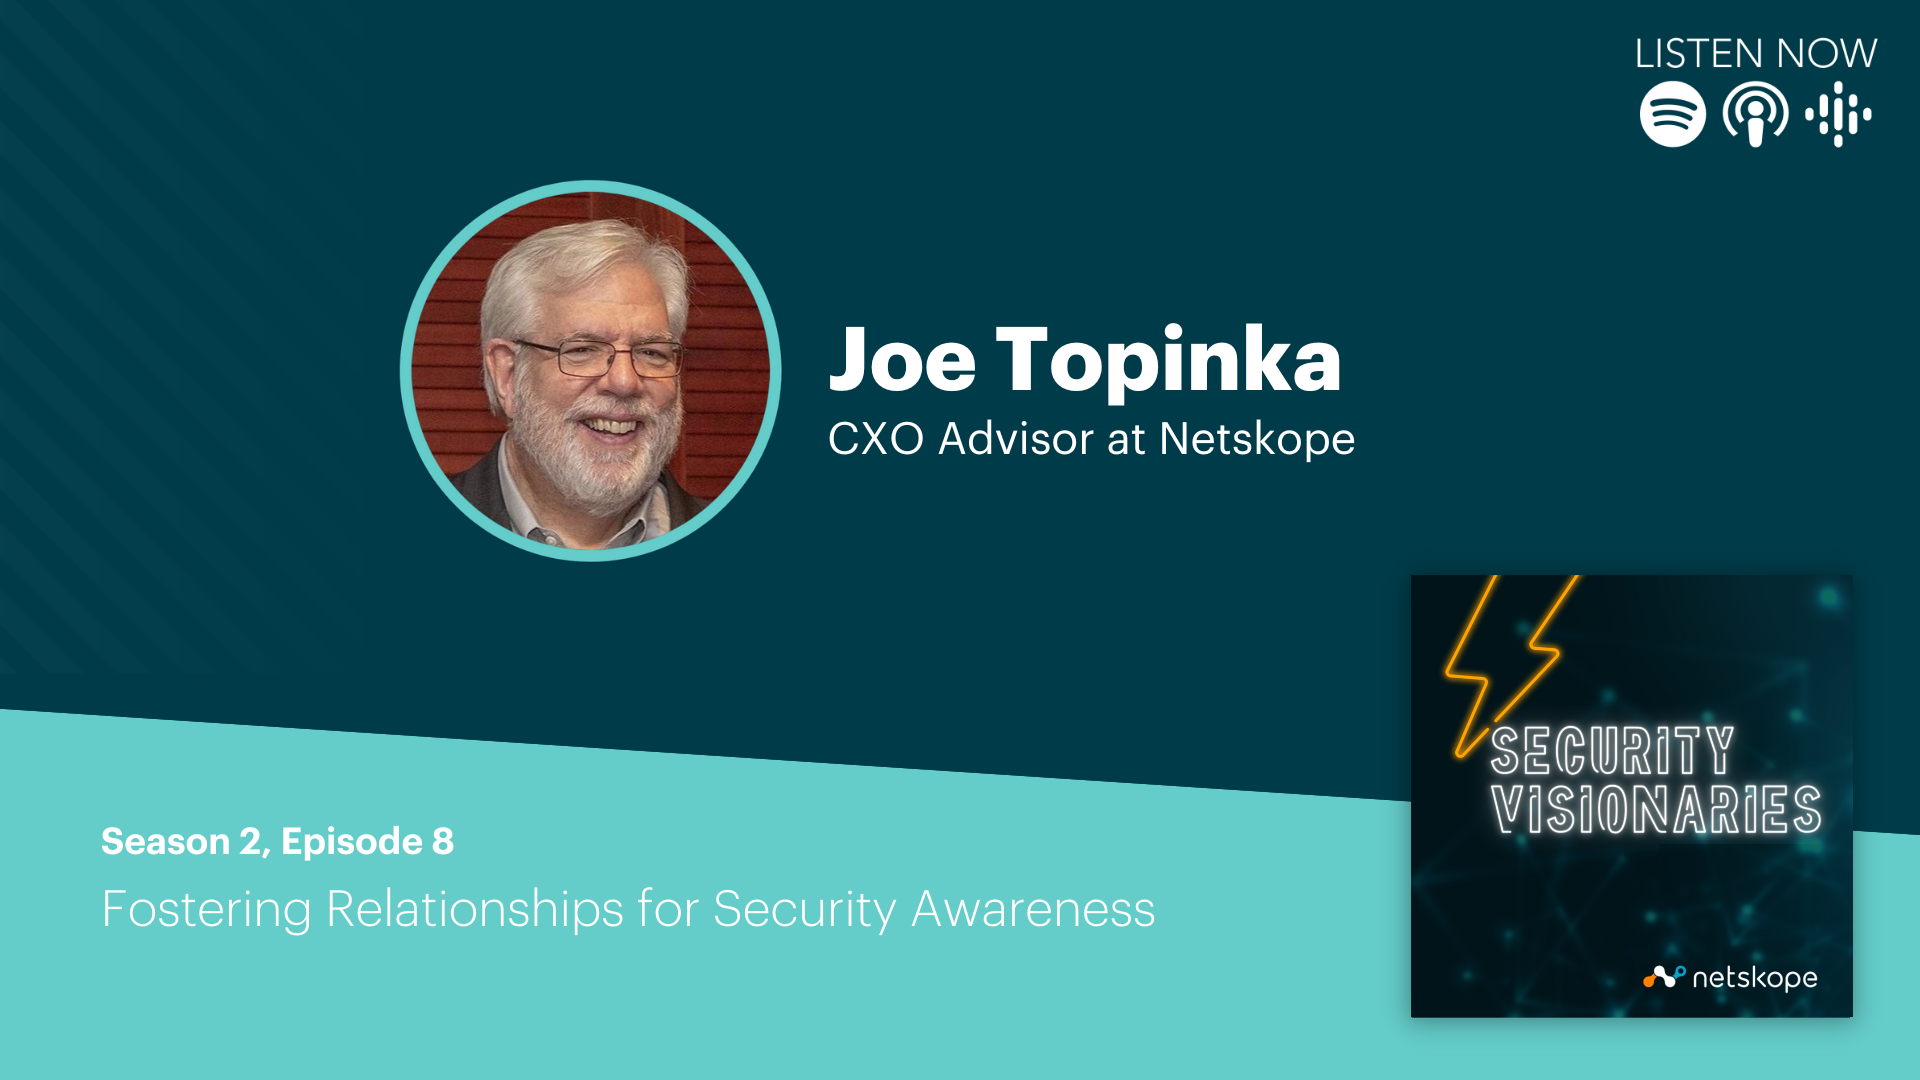 Fostering Relationships for Security Awareness with Joe Topinka, CXO Advisor at Netskope